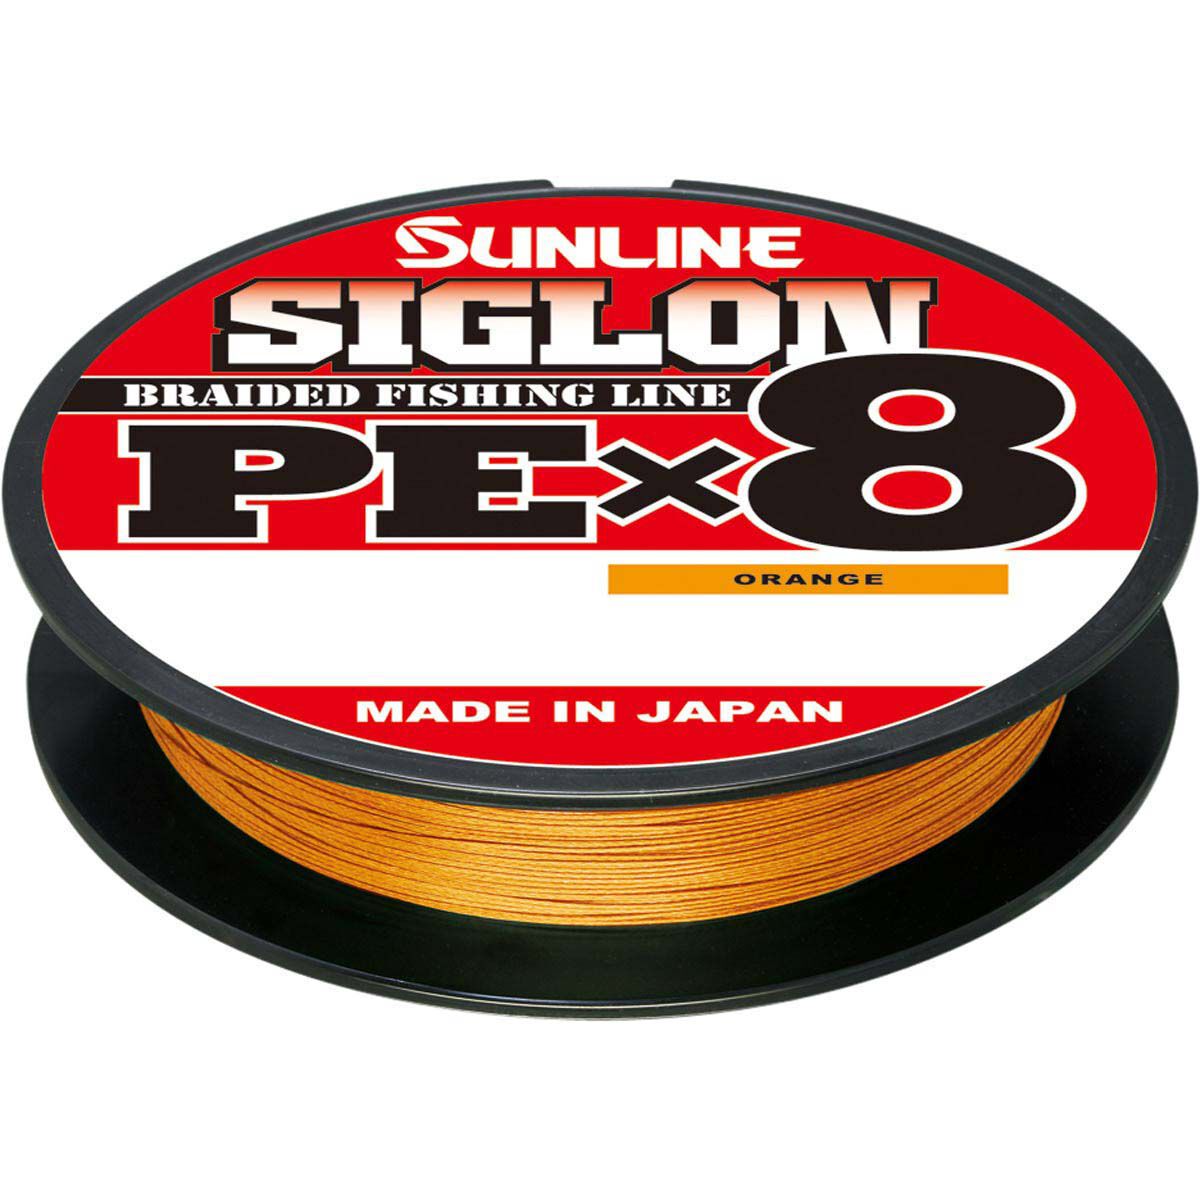 Sunline Siglon Orange Braid Line 150m 10lb